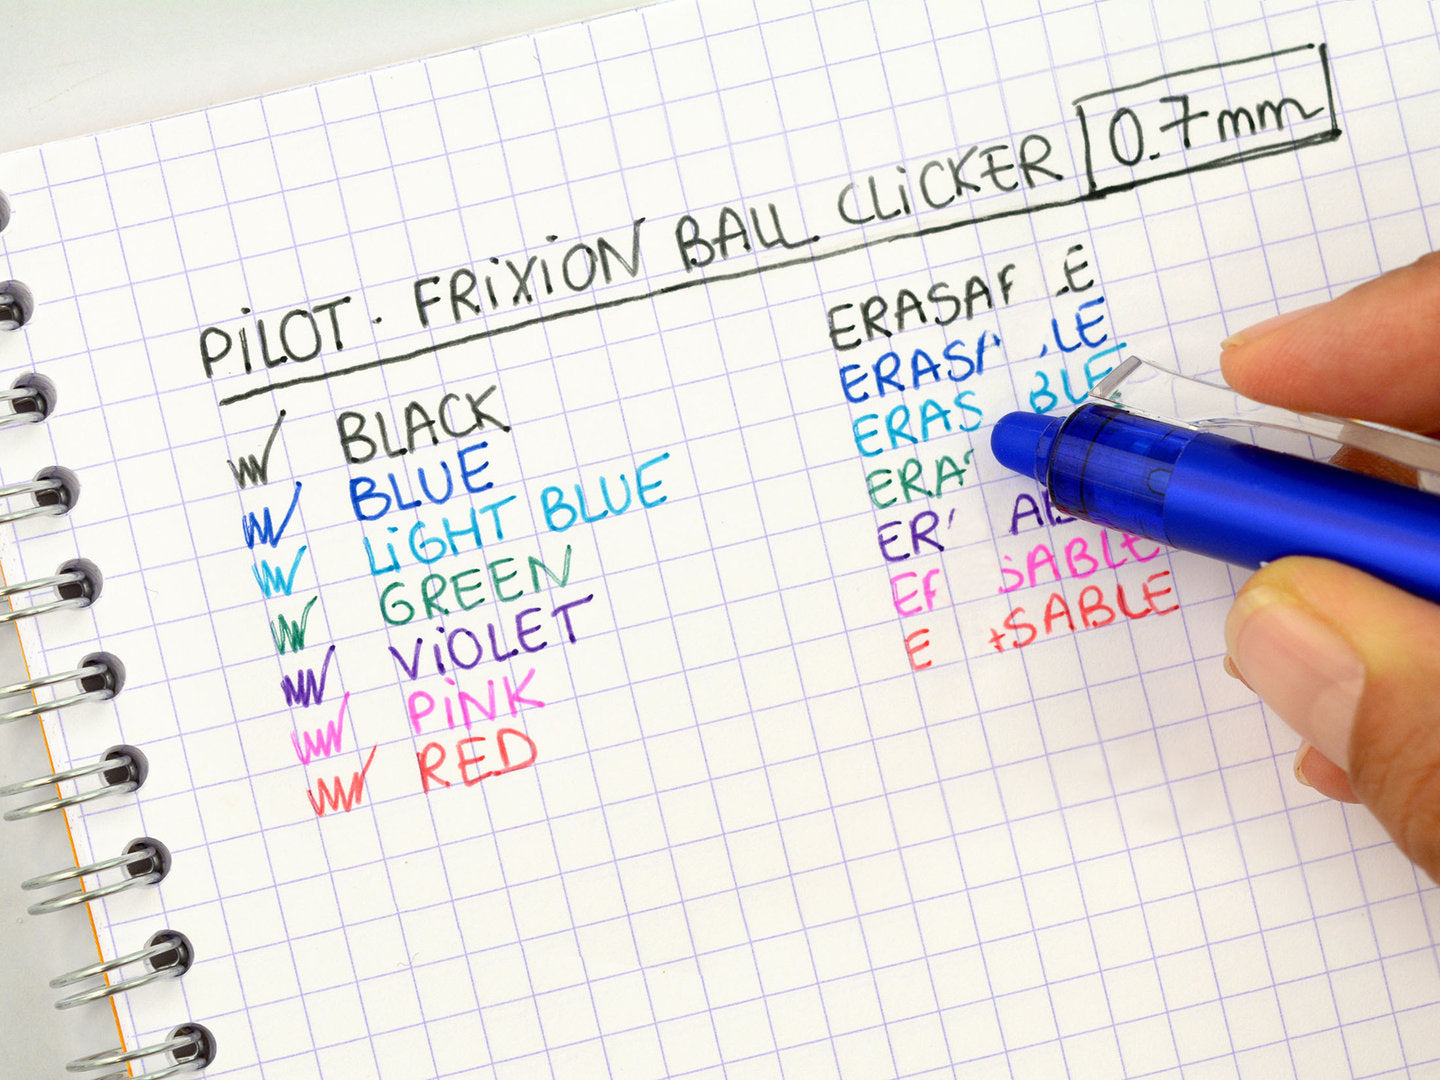 Pilot Frixion Ball Clicker 0,7 - musta